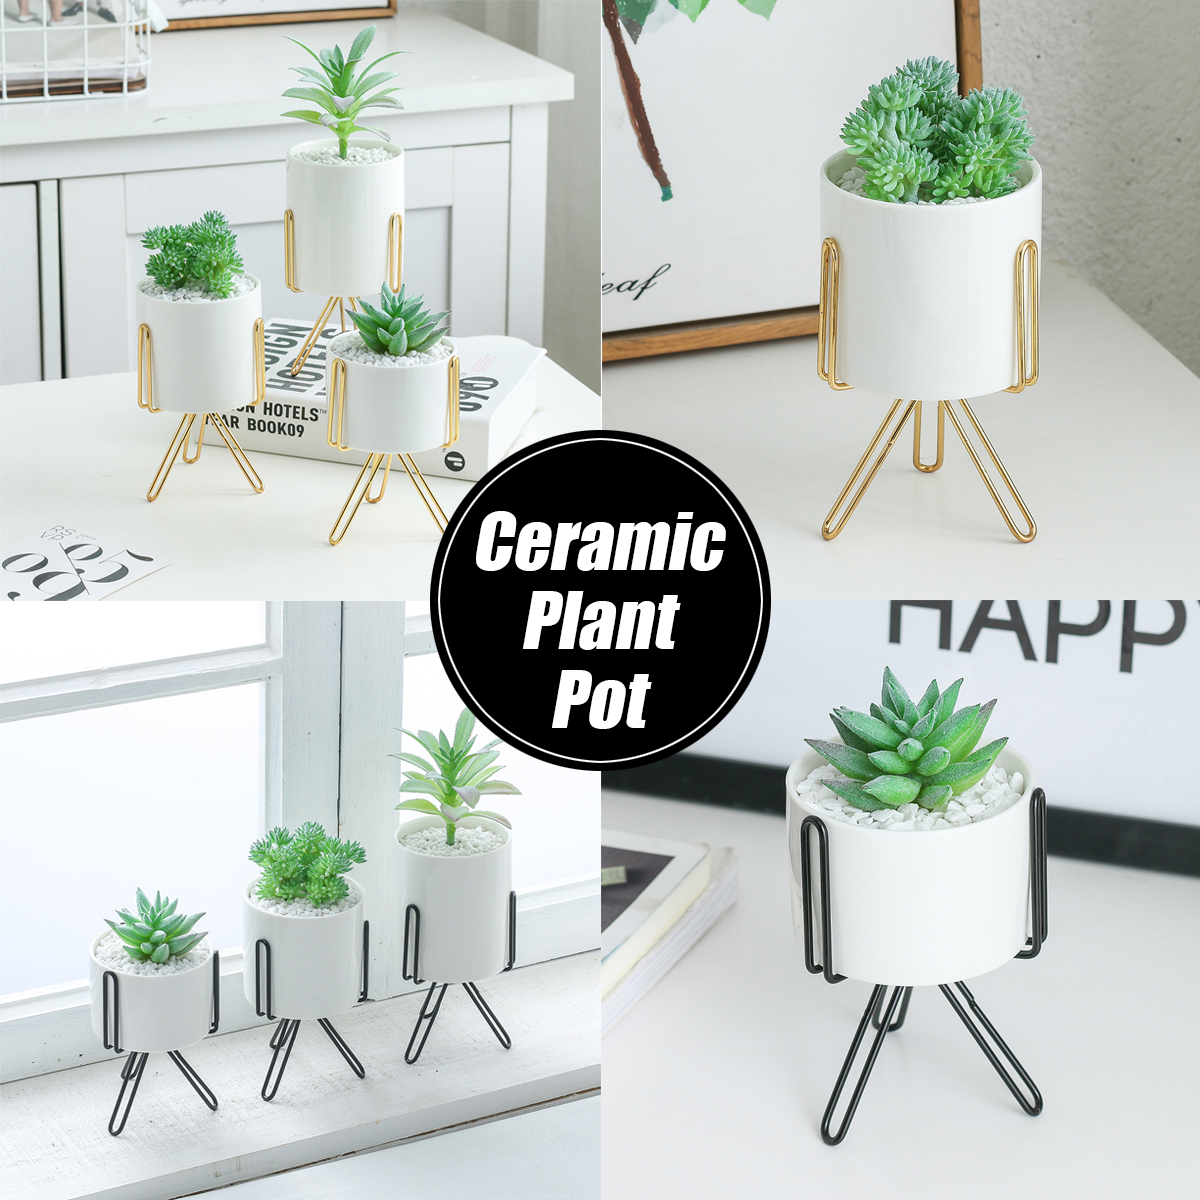 Iron-Wire-Metal-Rack-Ceramic-Succulent-Plant-Flower-Pot-Cactus-Holder-Home-Office-Desktop-Decor-1623194-1